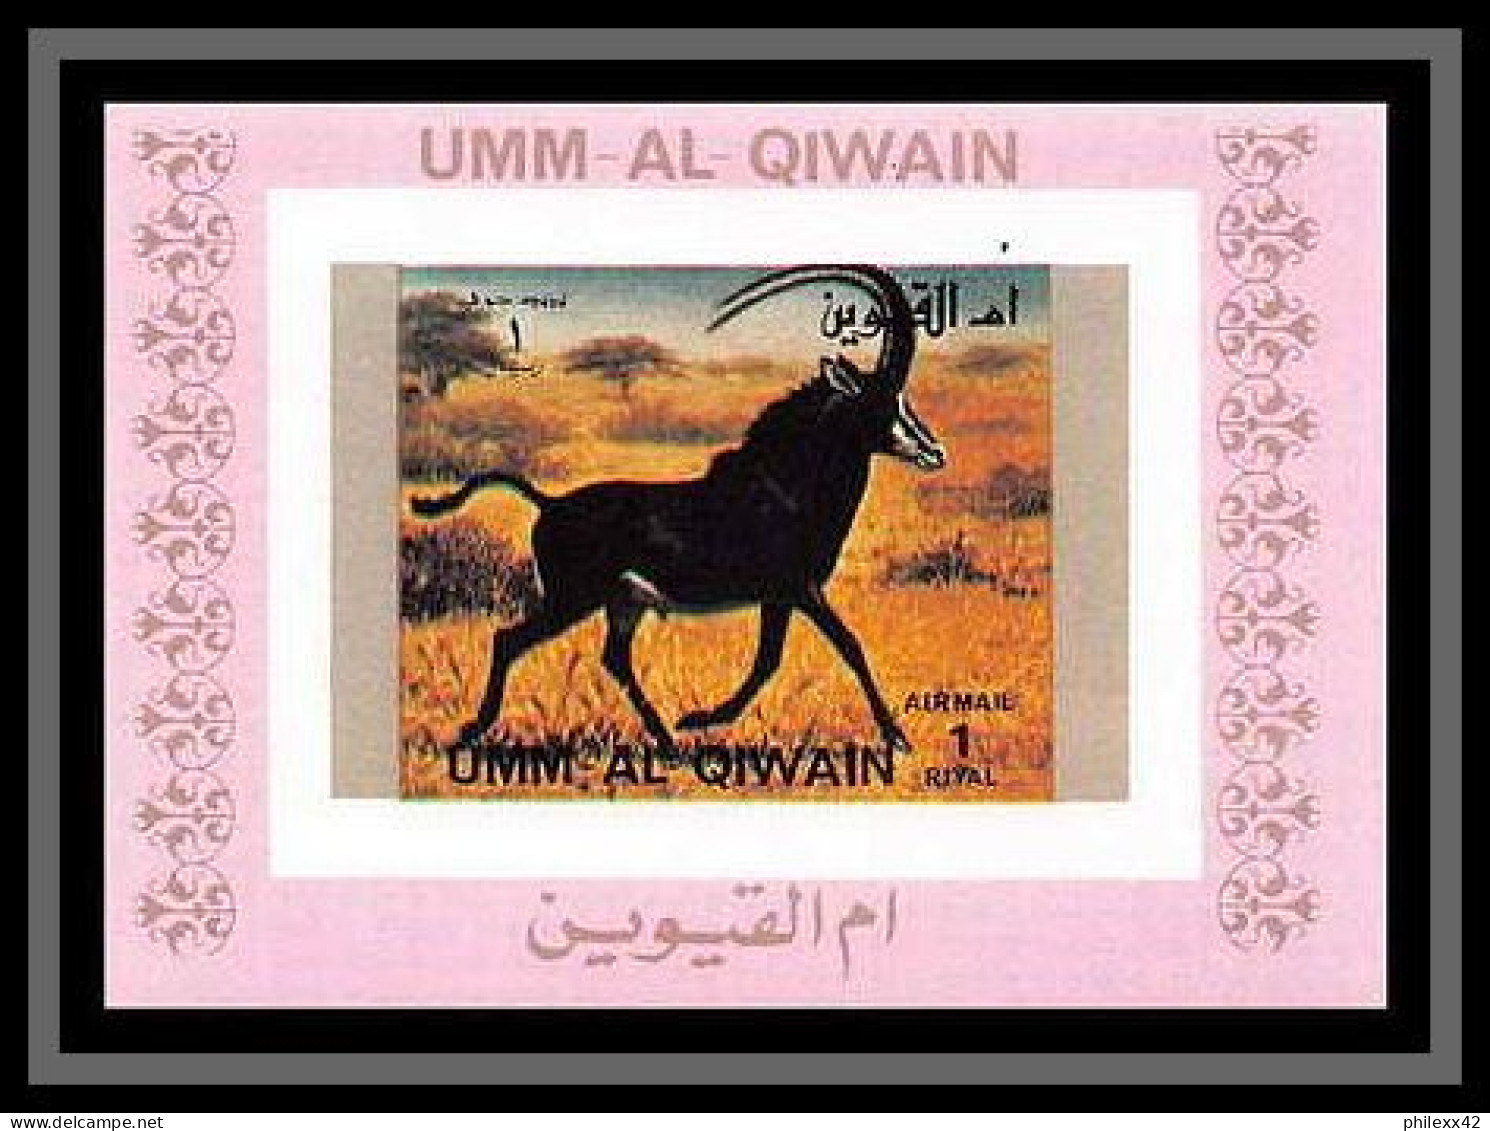 0050/ Umm al Qiwain deluxe blocs ** MNH michel N° 1370 / 1385 animaux - animals rose non dentelé imperf ** MNH